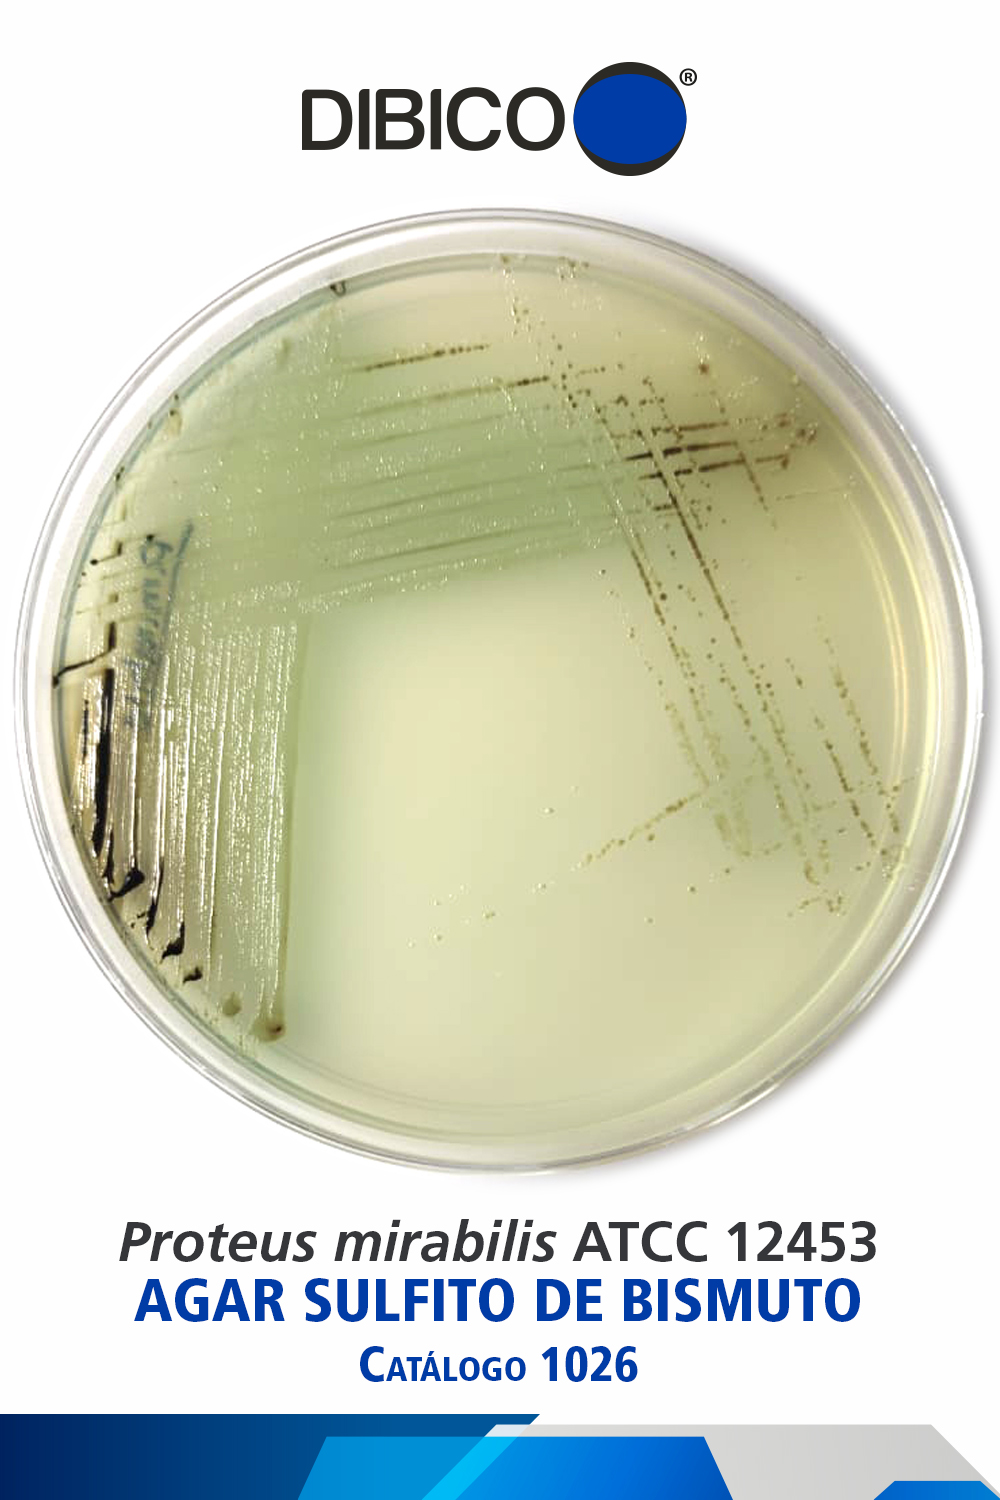 Proteus mirabilis ATCC 12453 Cat 1026